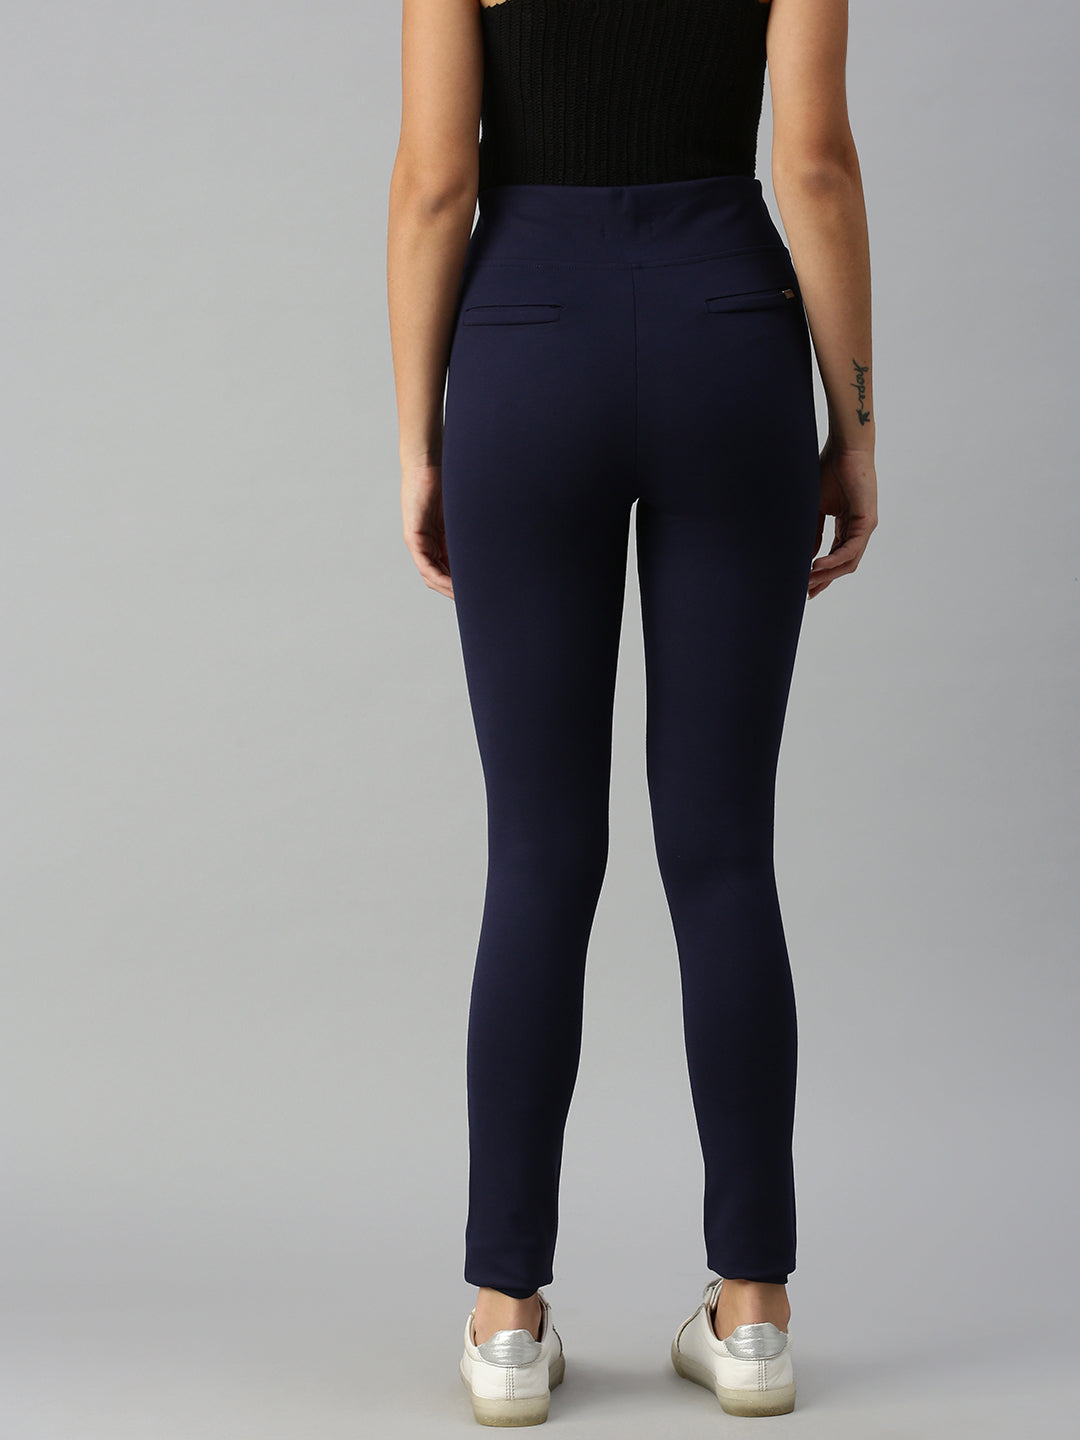 Women's Navy Blue Solid Denim Skinny Jeans